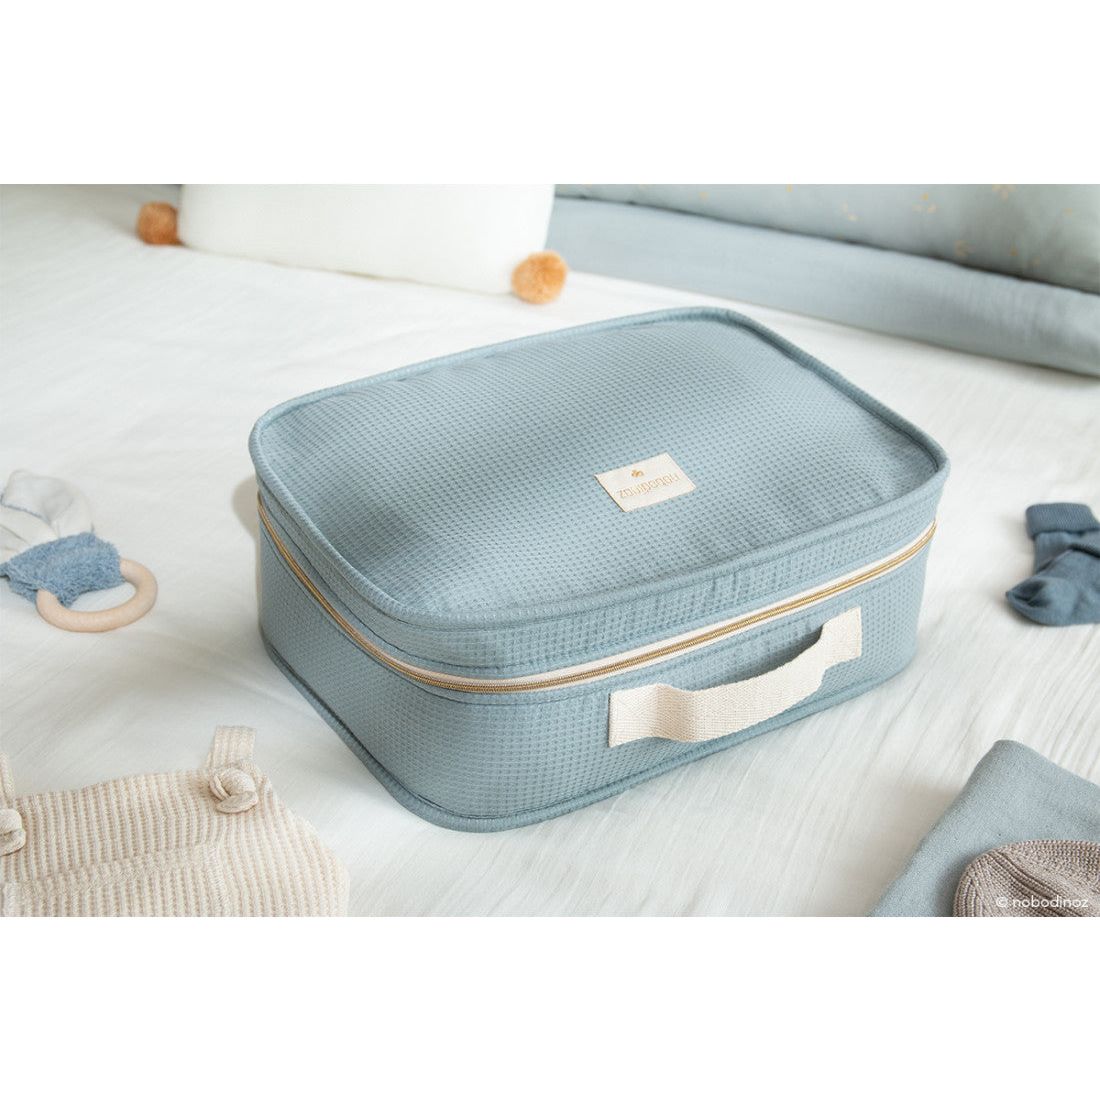 Maletita Victoria baby suitcase - Stone Blue